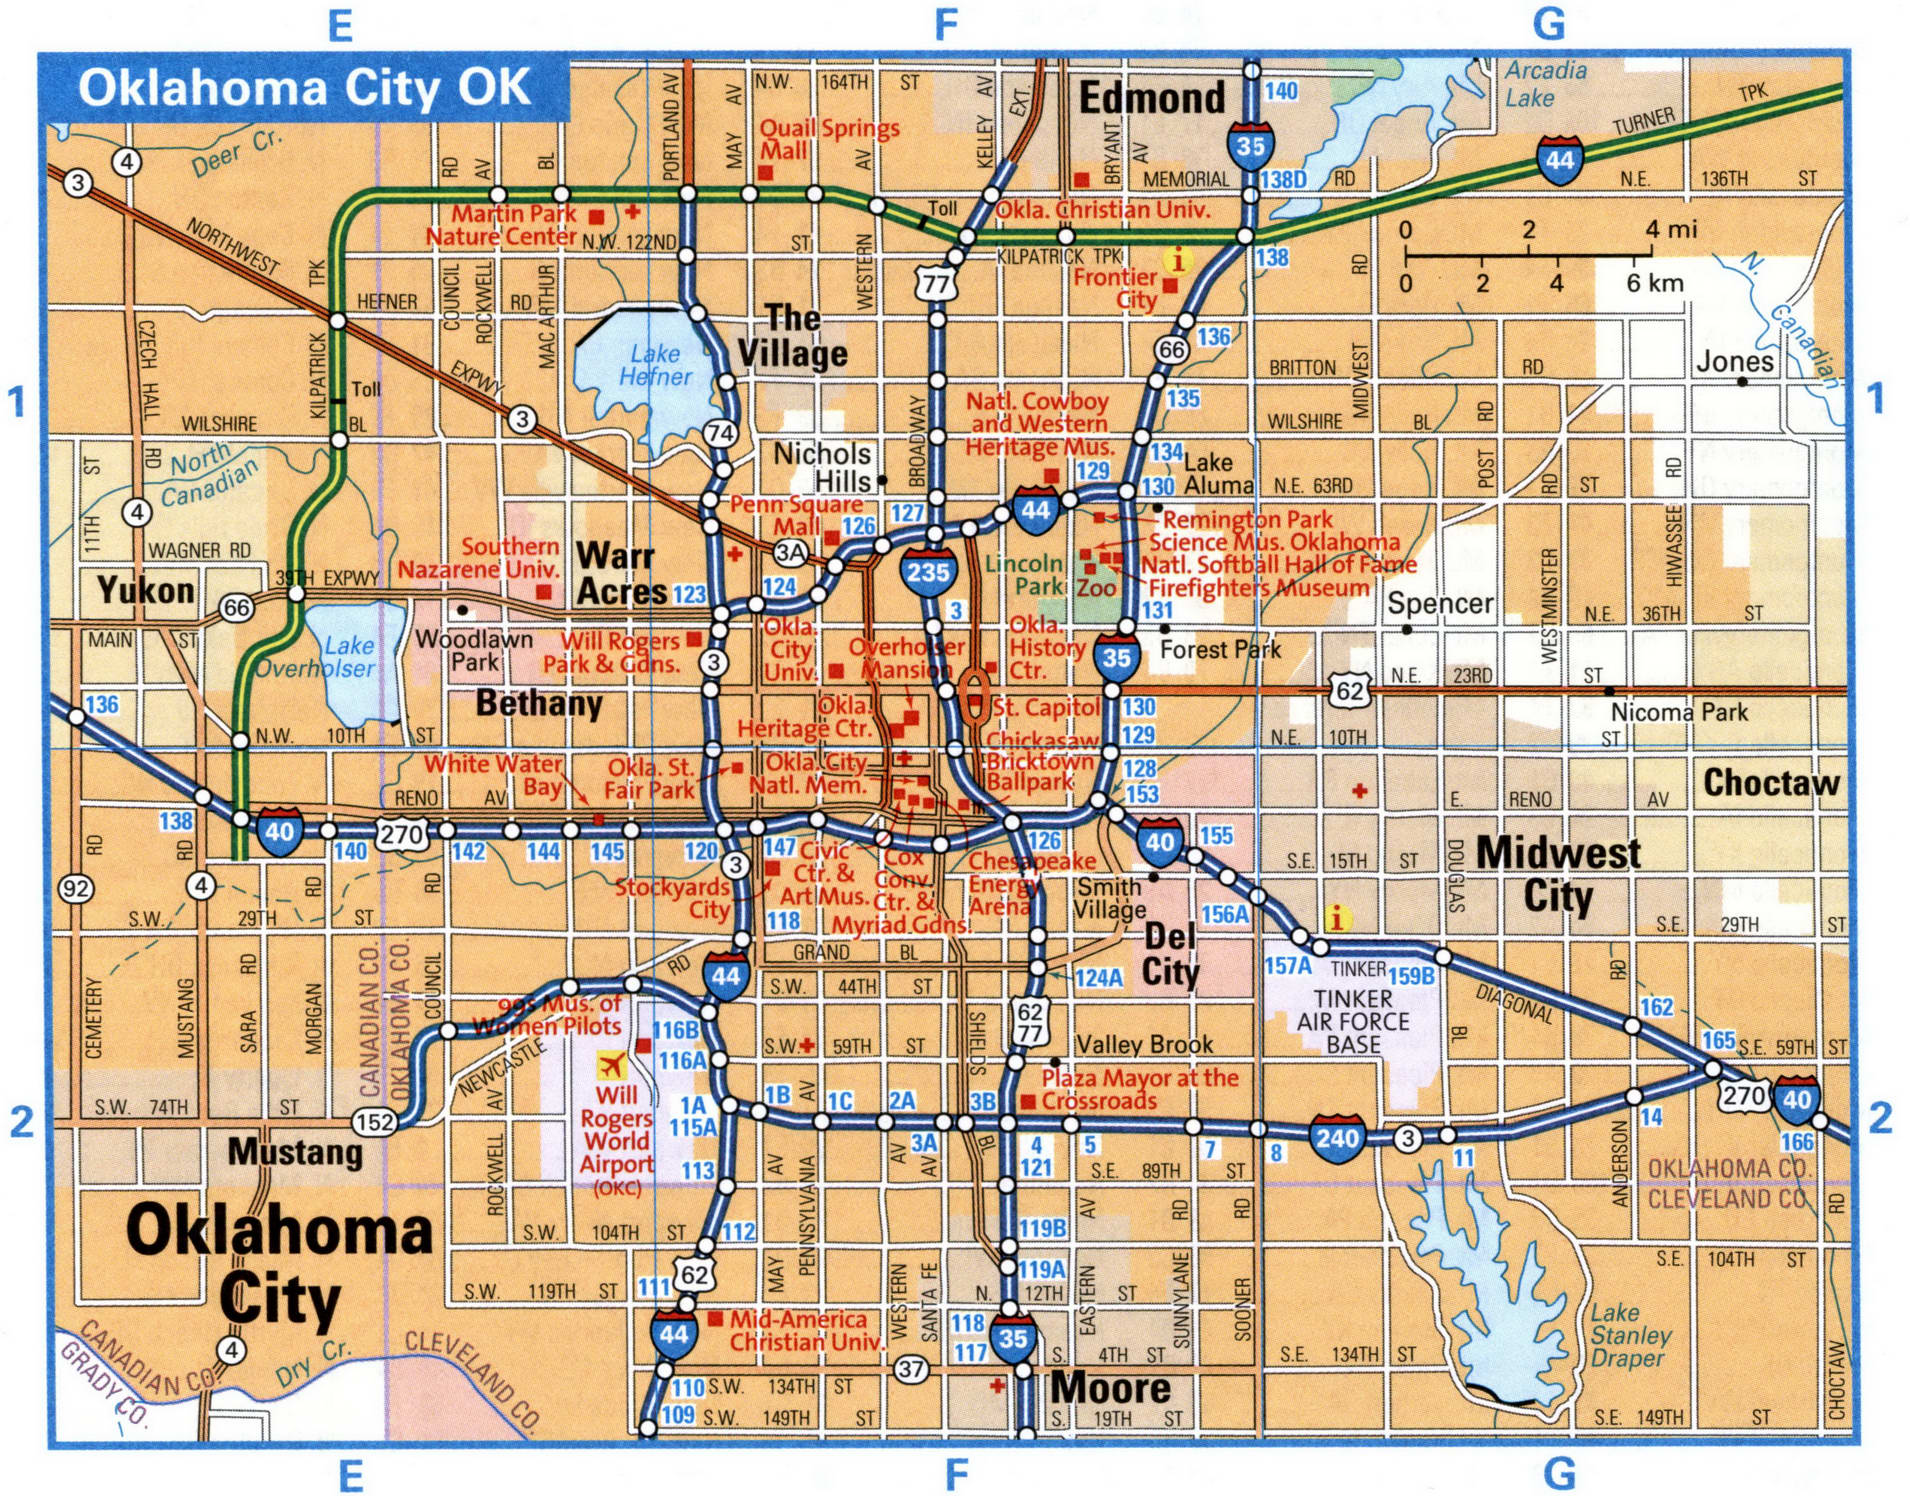 Oklahoma city interstate highway map